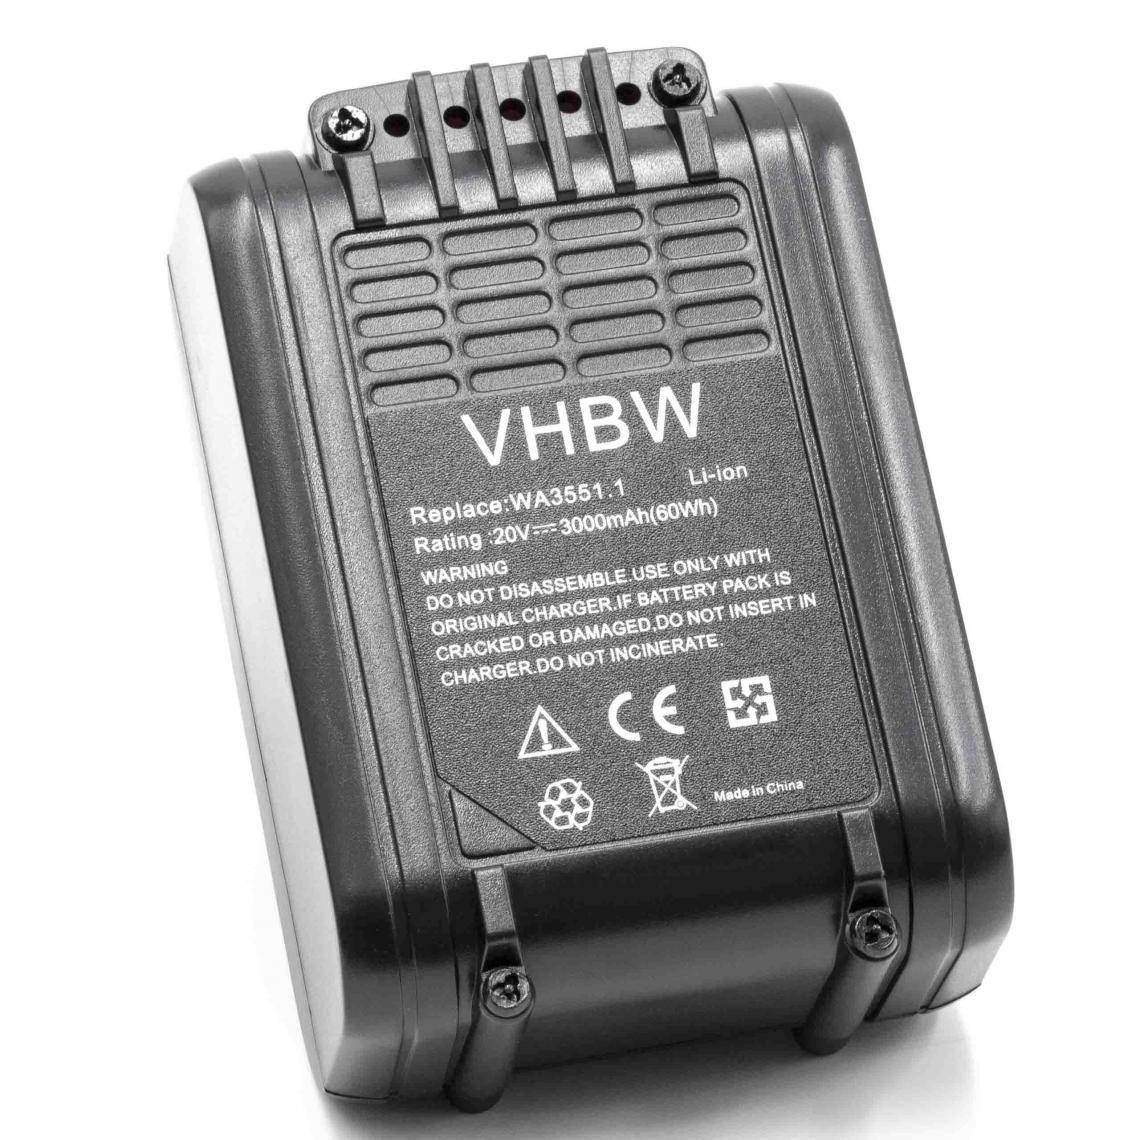 Vhbw - vhbw Batterie compatible avec Worx WG251, WG251.5, WG251E, WG255E, WG255E.5, WG259, WG259E outil électrique (3000mAh Li-ion 20 V) - Clouterie